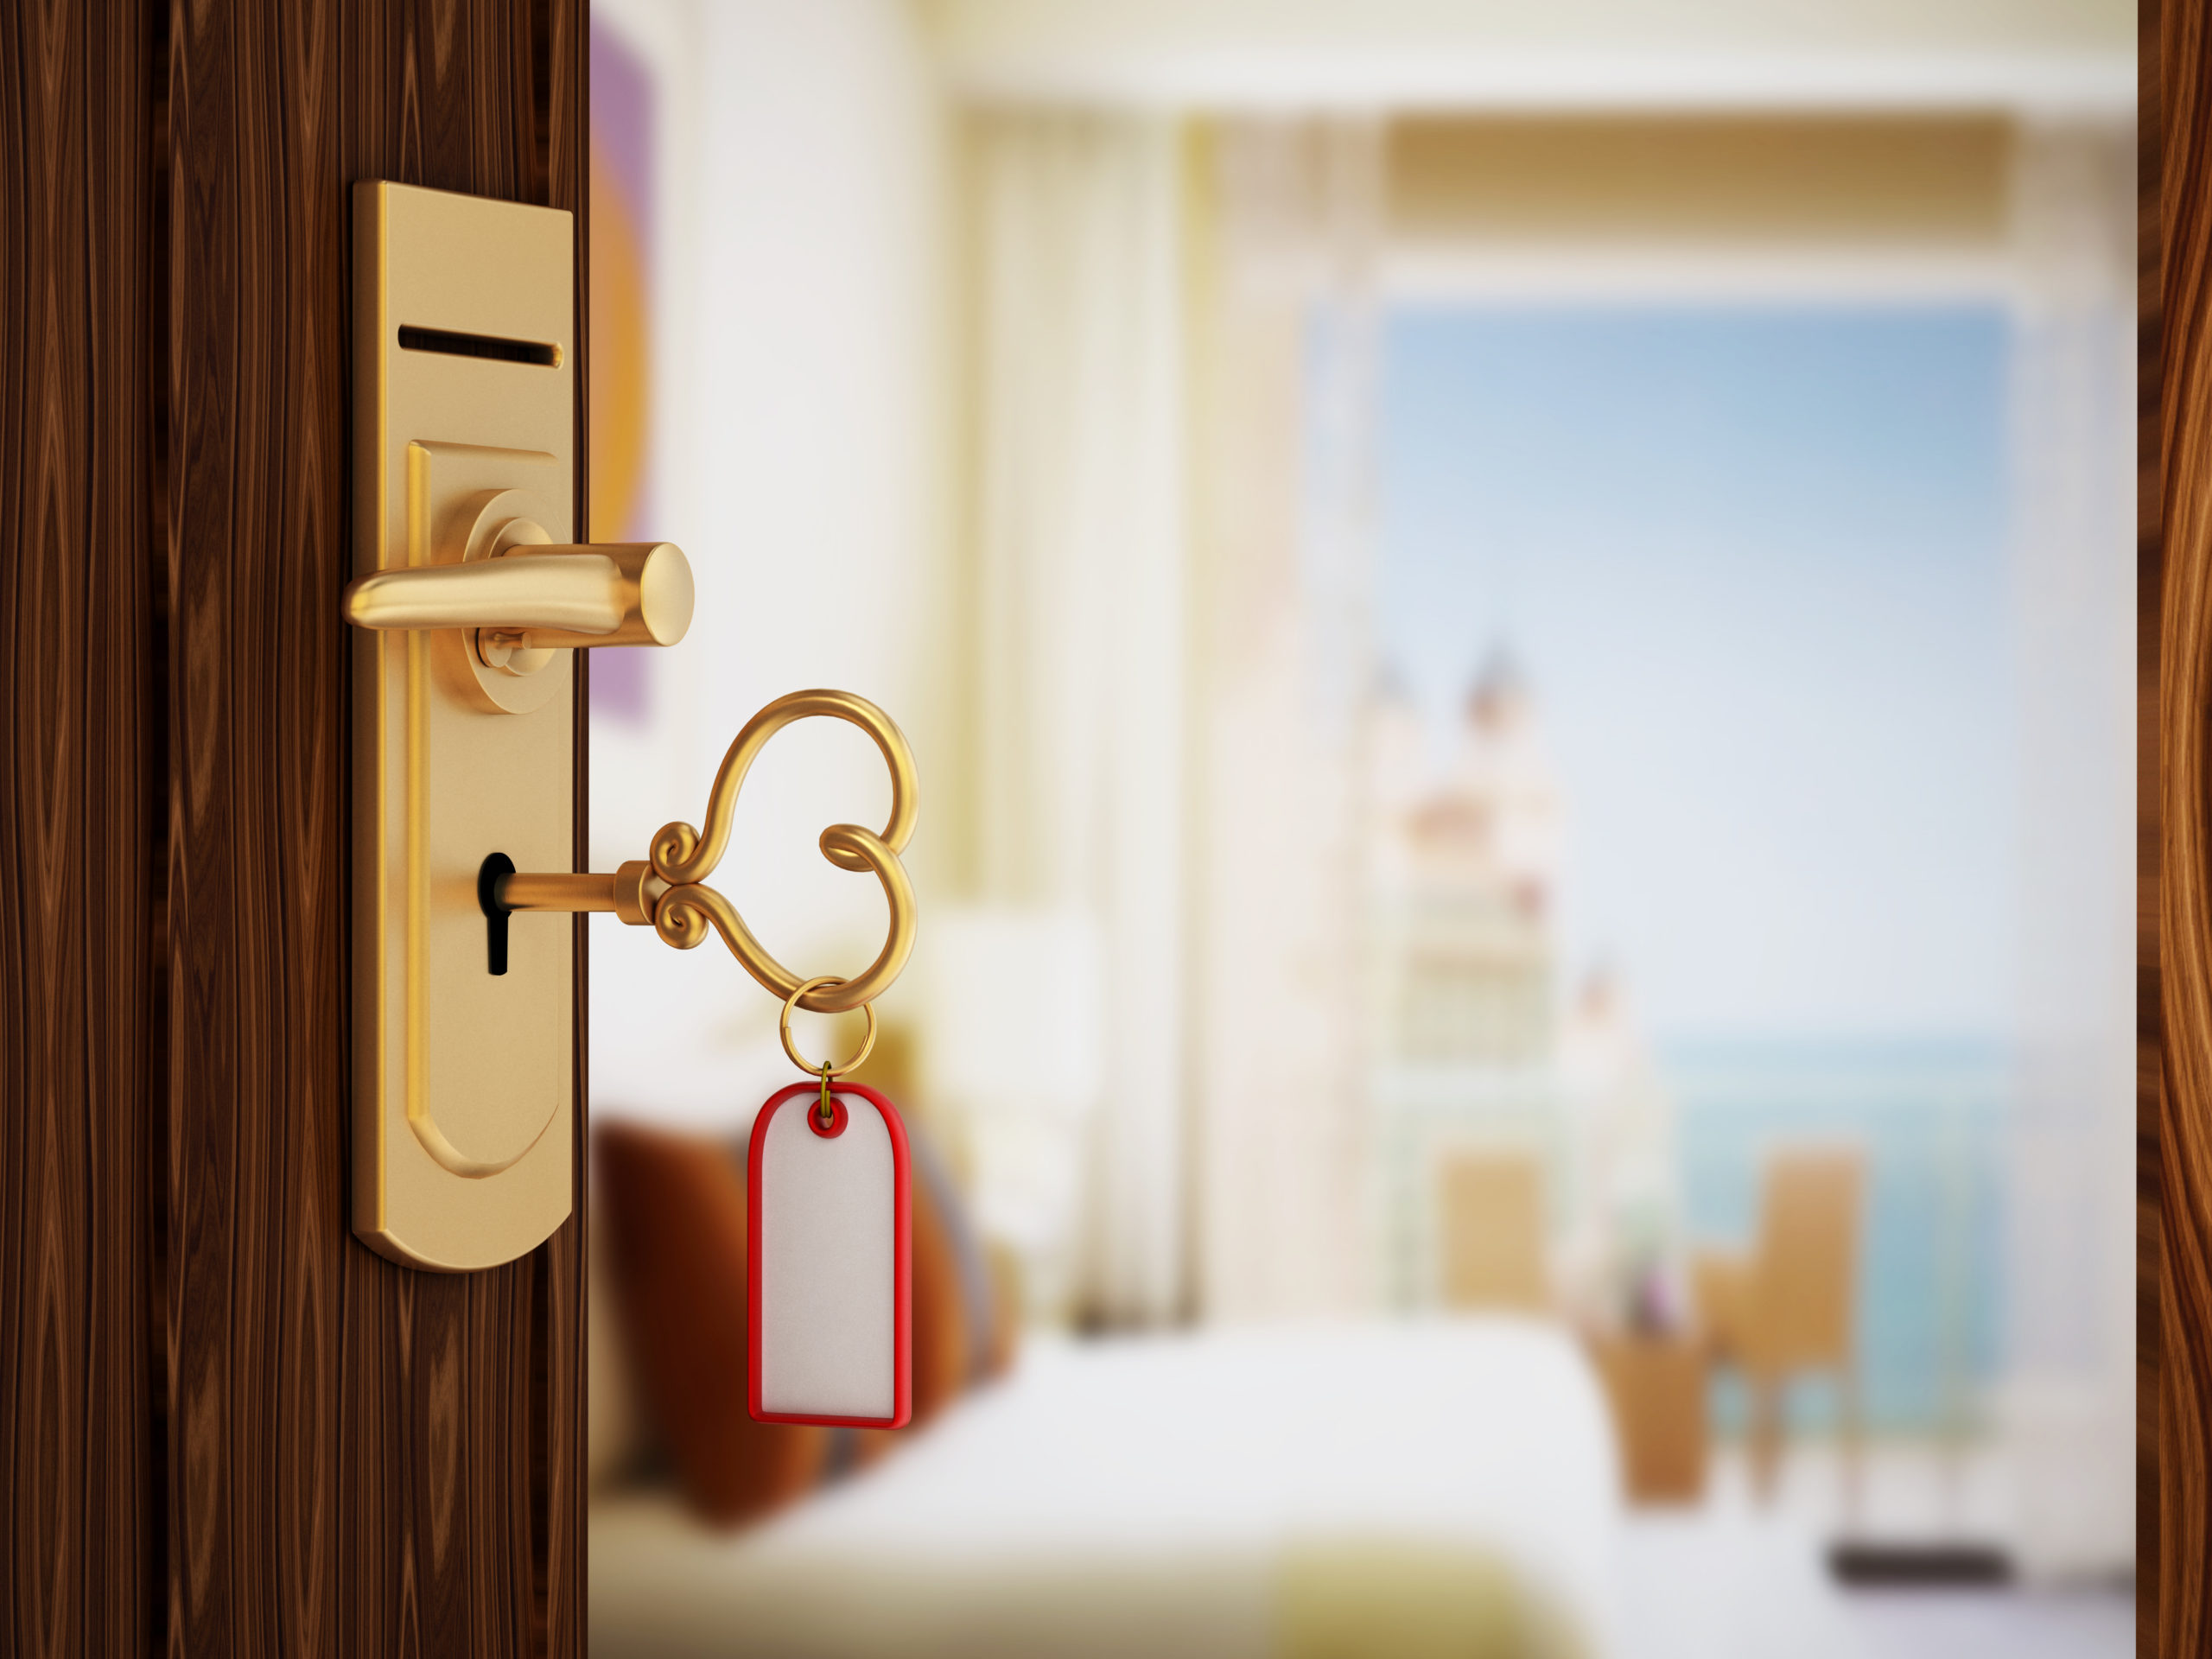 Heart shaped hotel room key on the door